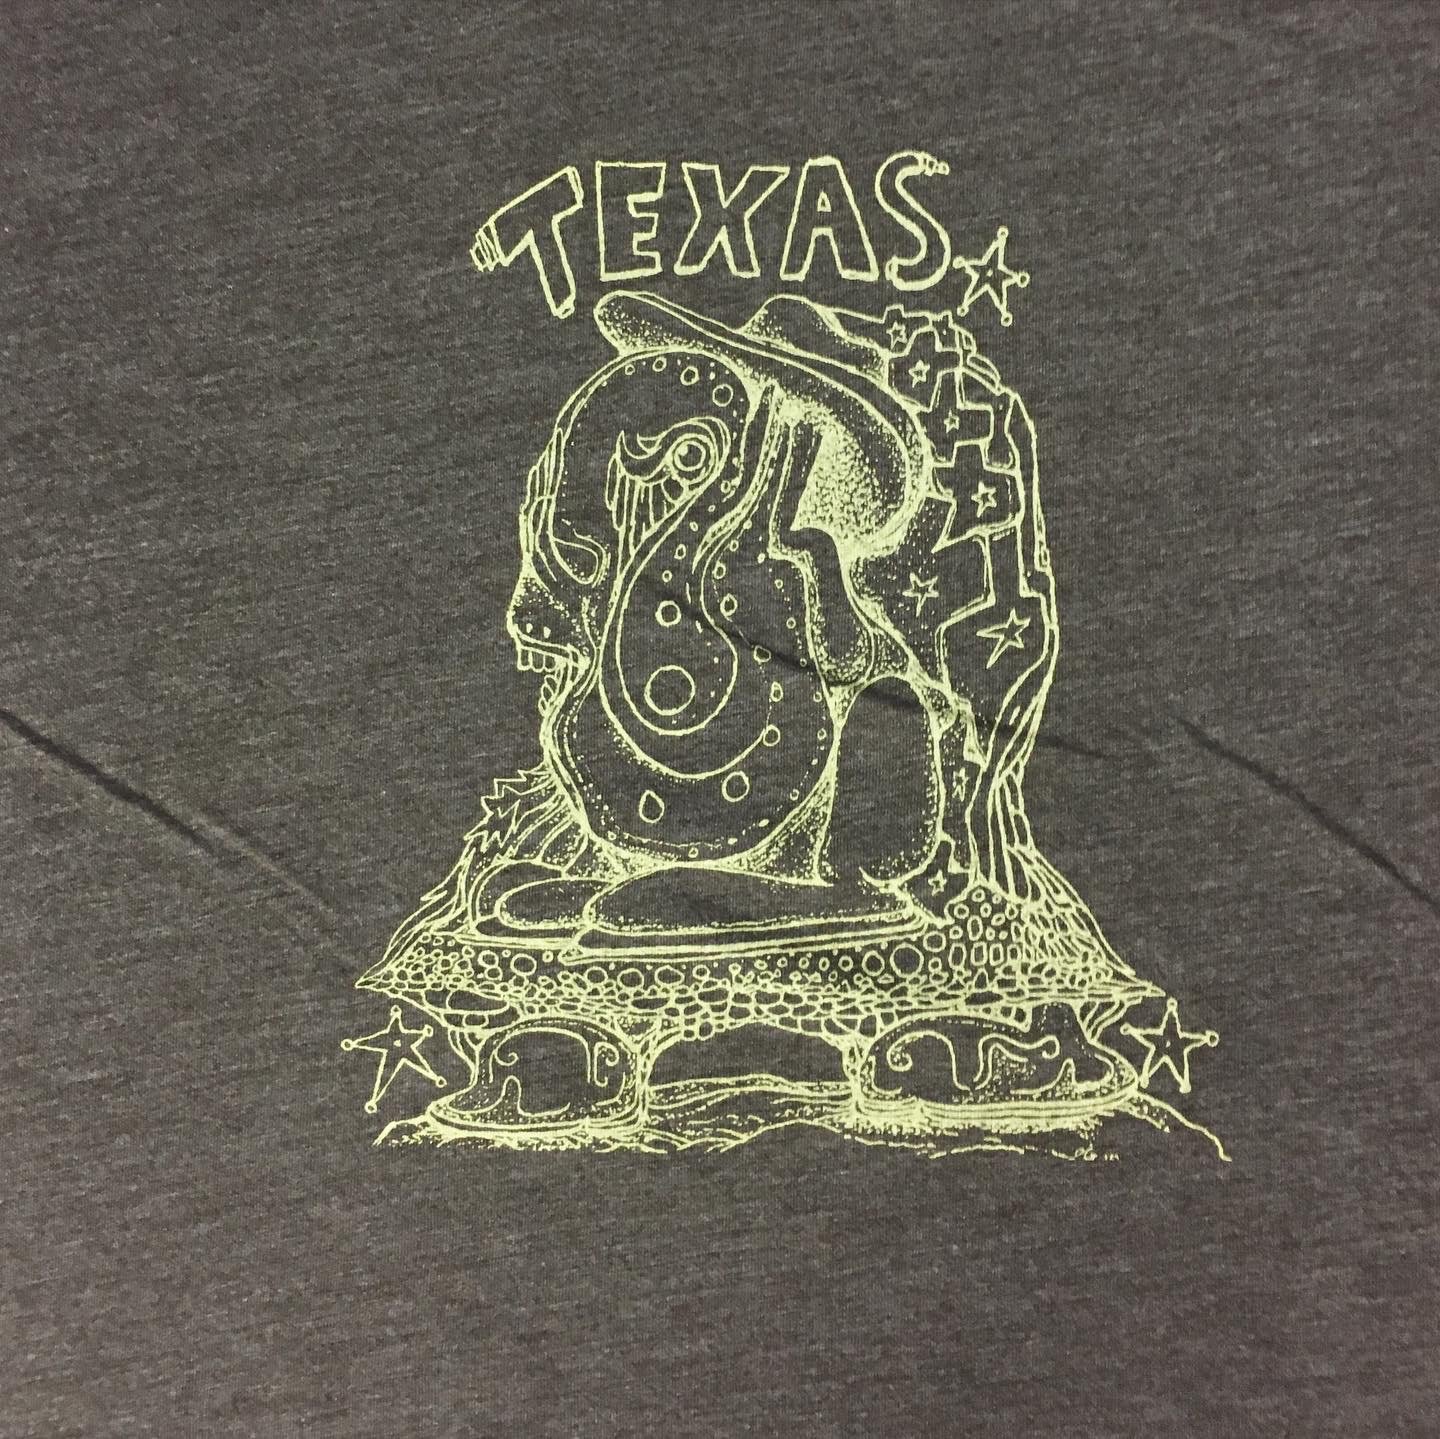 Texas Tee by Dan Groth